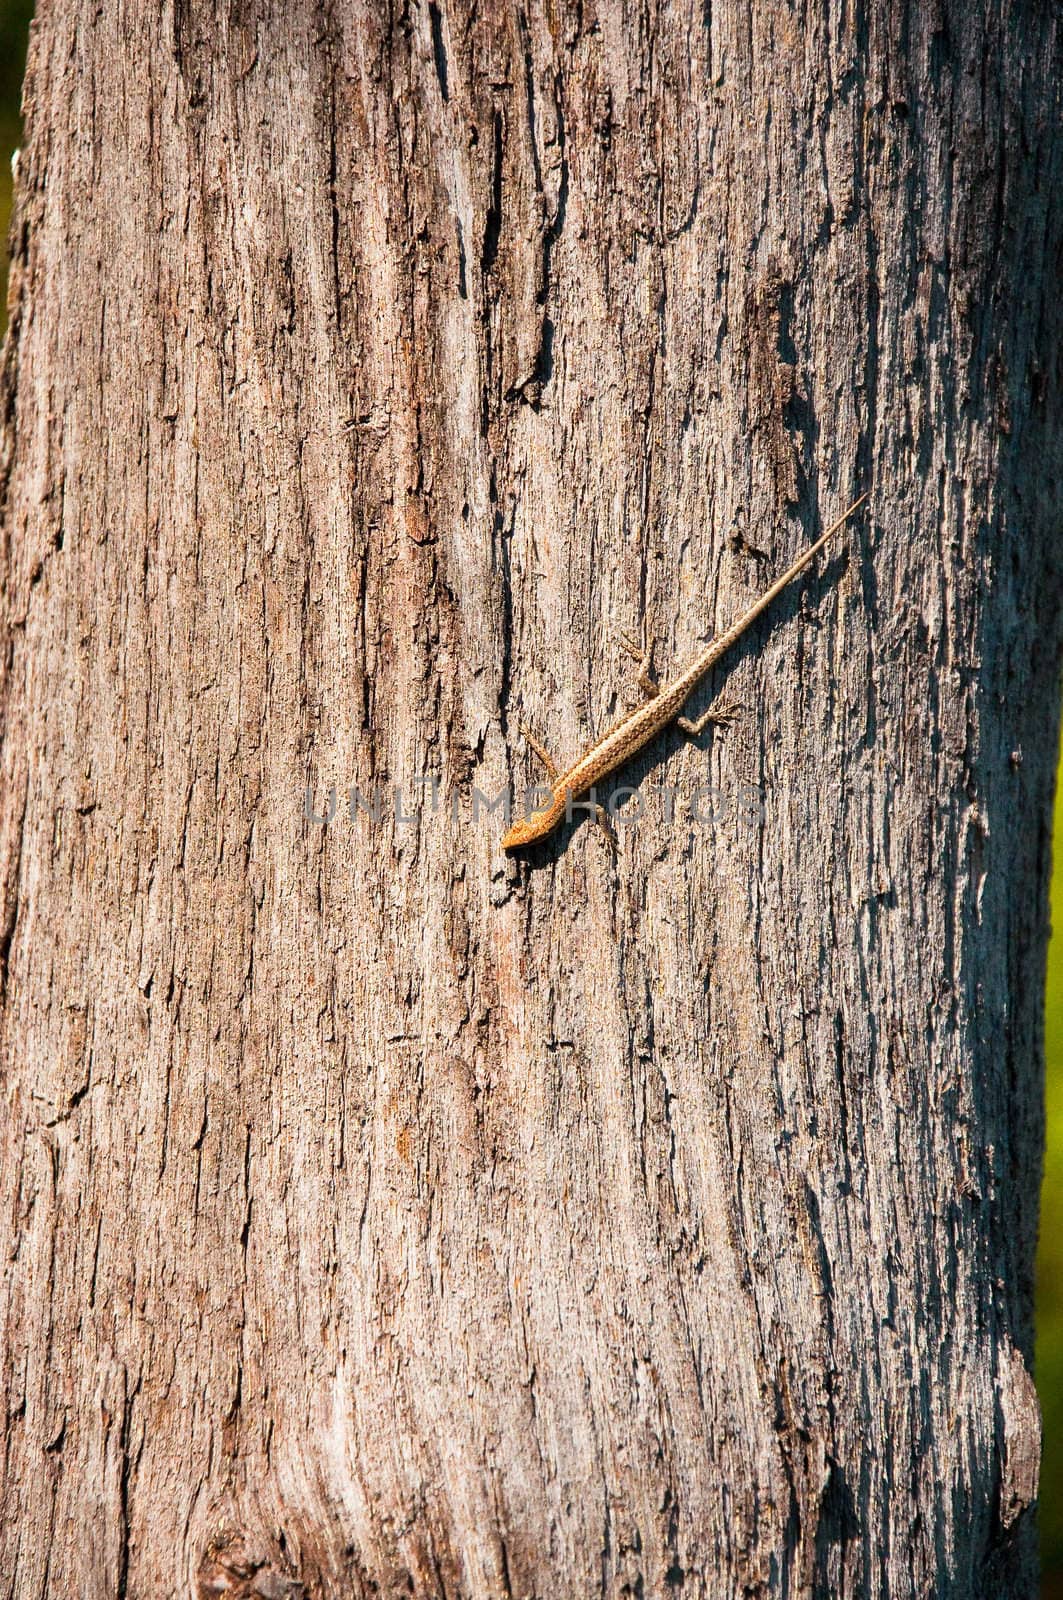 camouflaged lizard on the trunk, australia